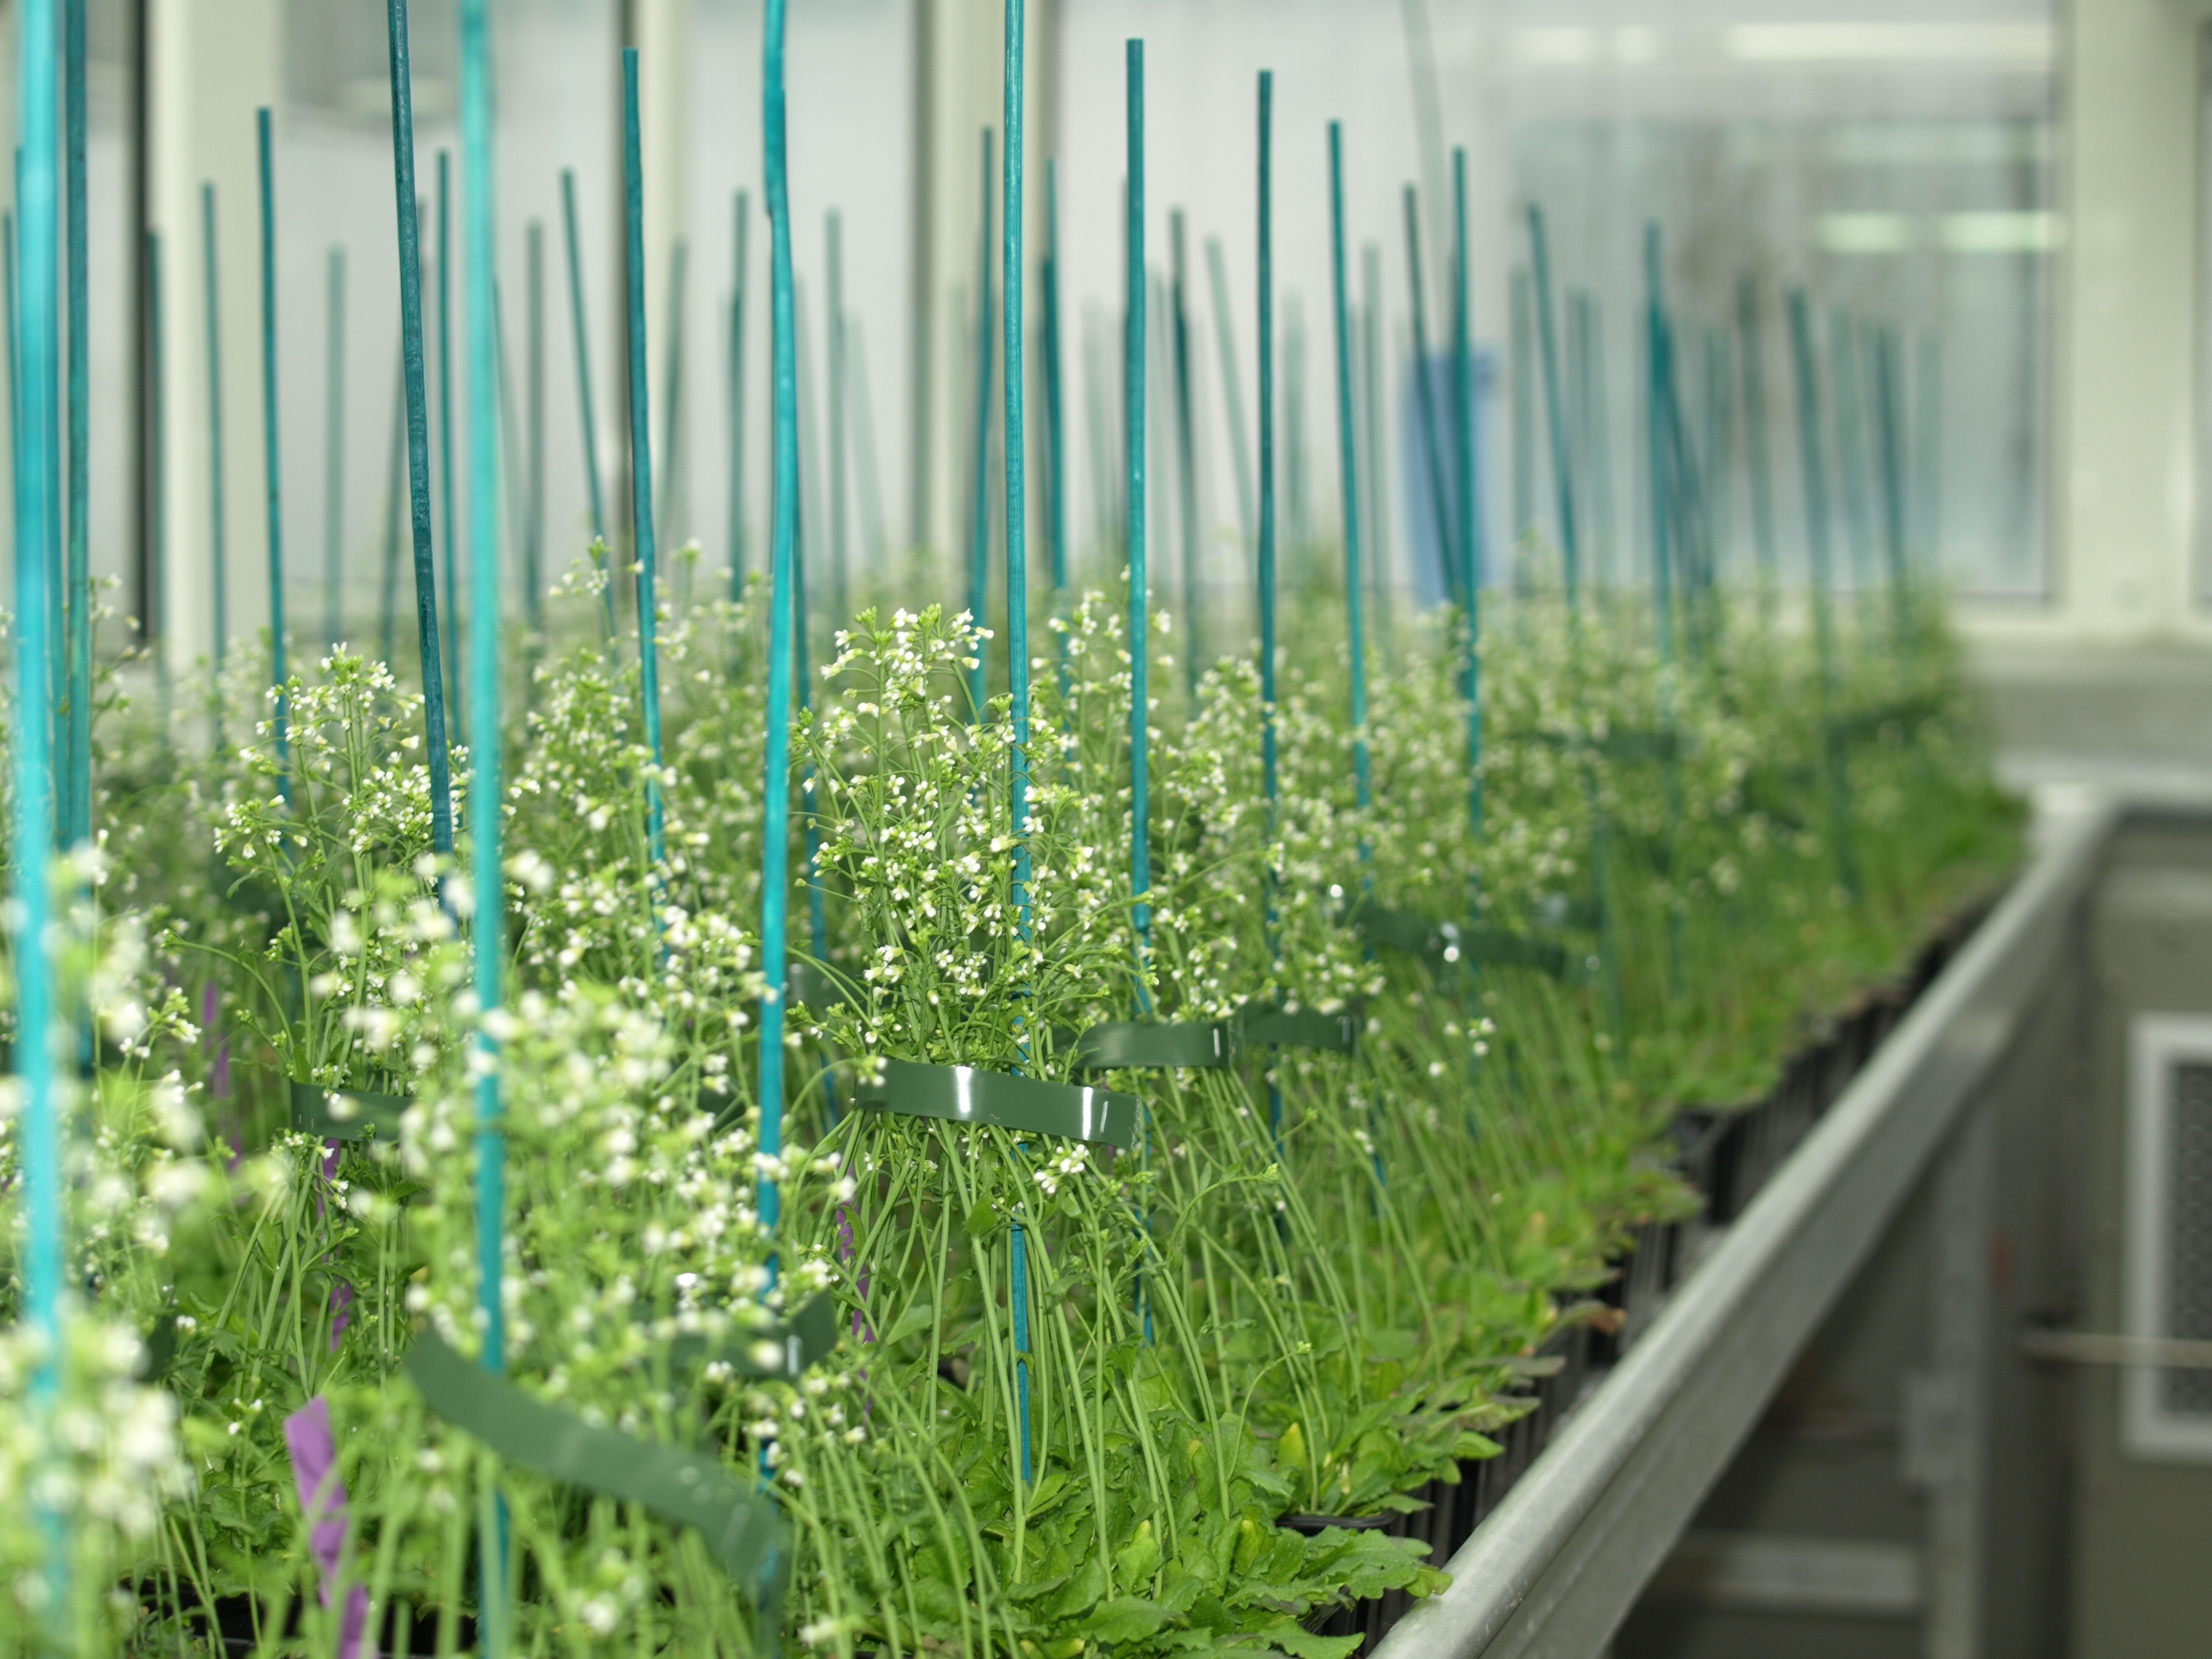 Arabidopsis thaliana plants growing in the greenhouse